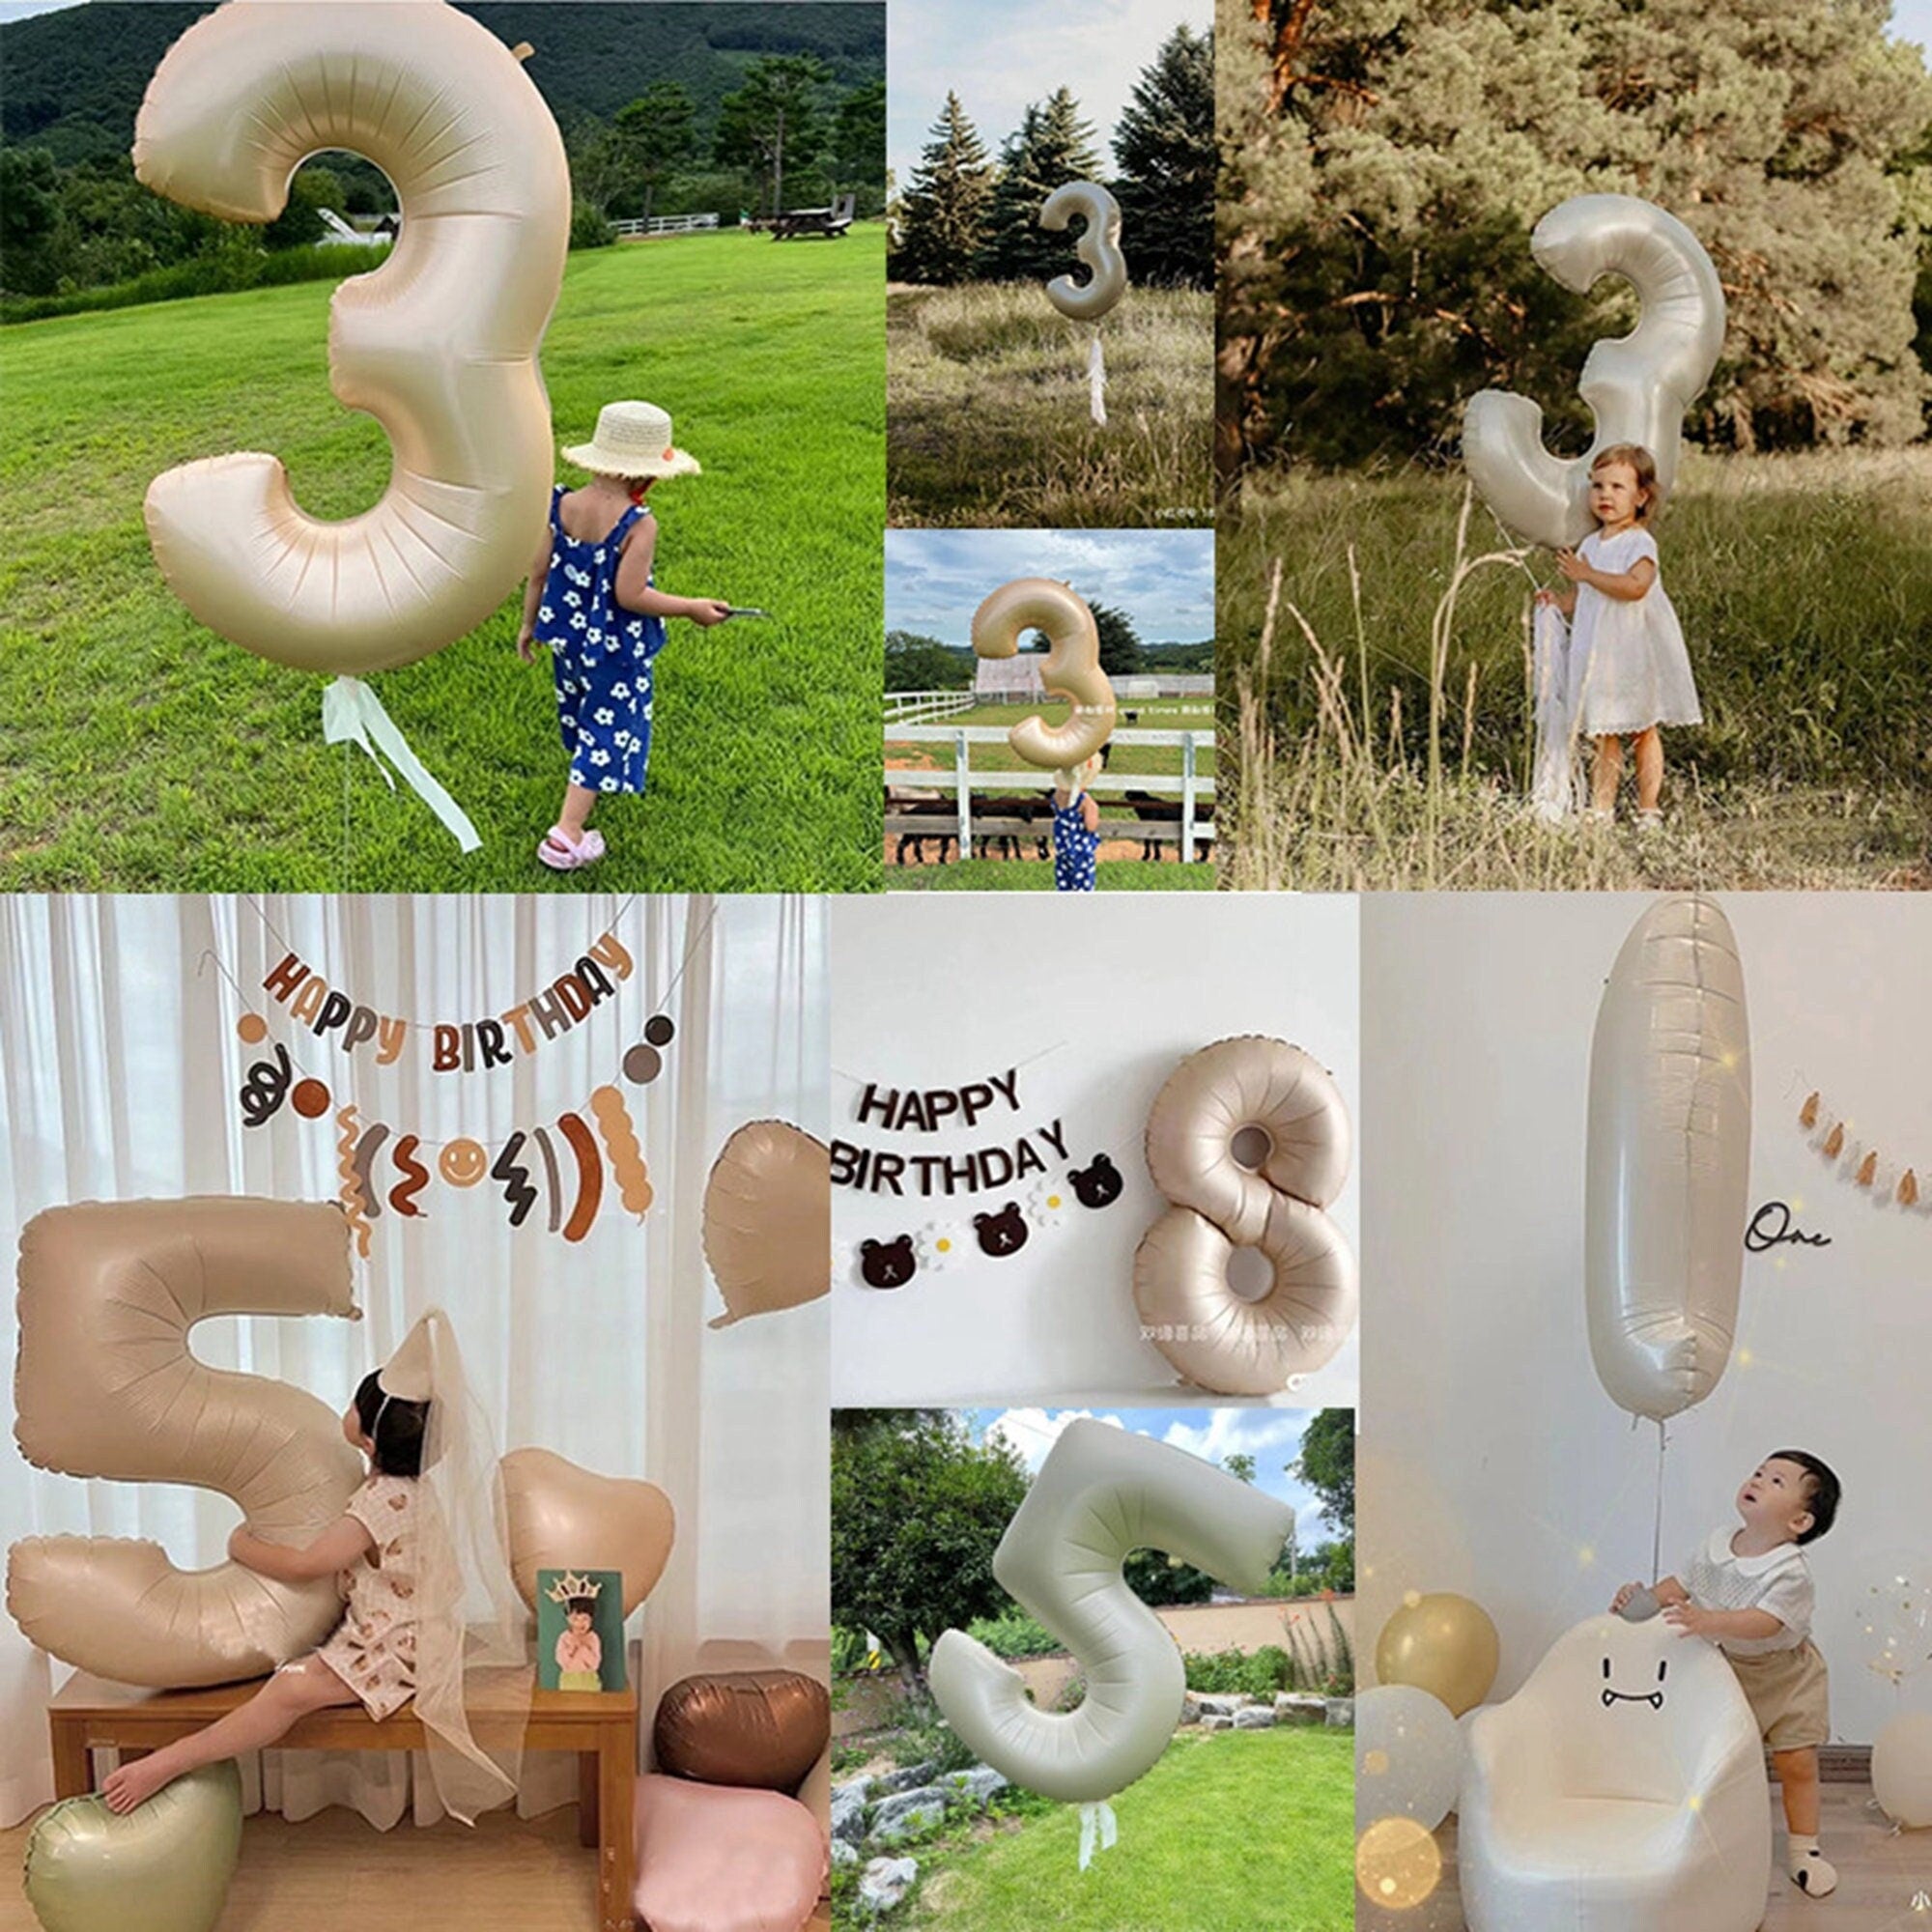 40" Caramel & Cream Jumbo Foil Numbers Helium Balloon 100CM Birthday Wedding Decor Baby Shower Mylar Foil Metallic